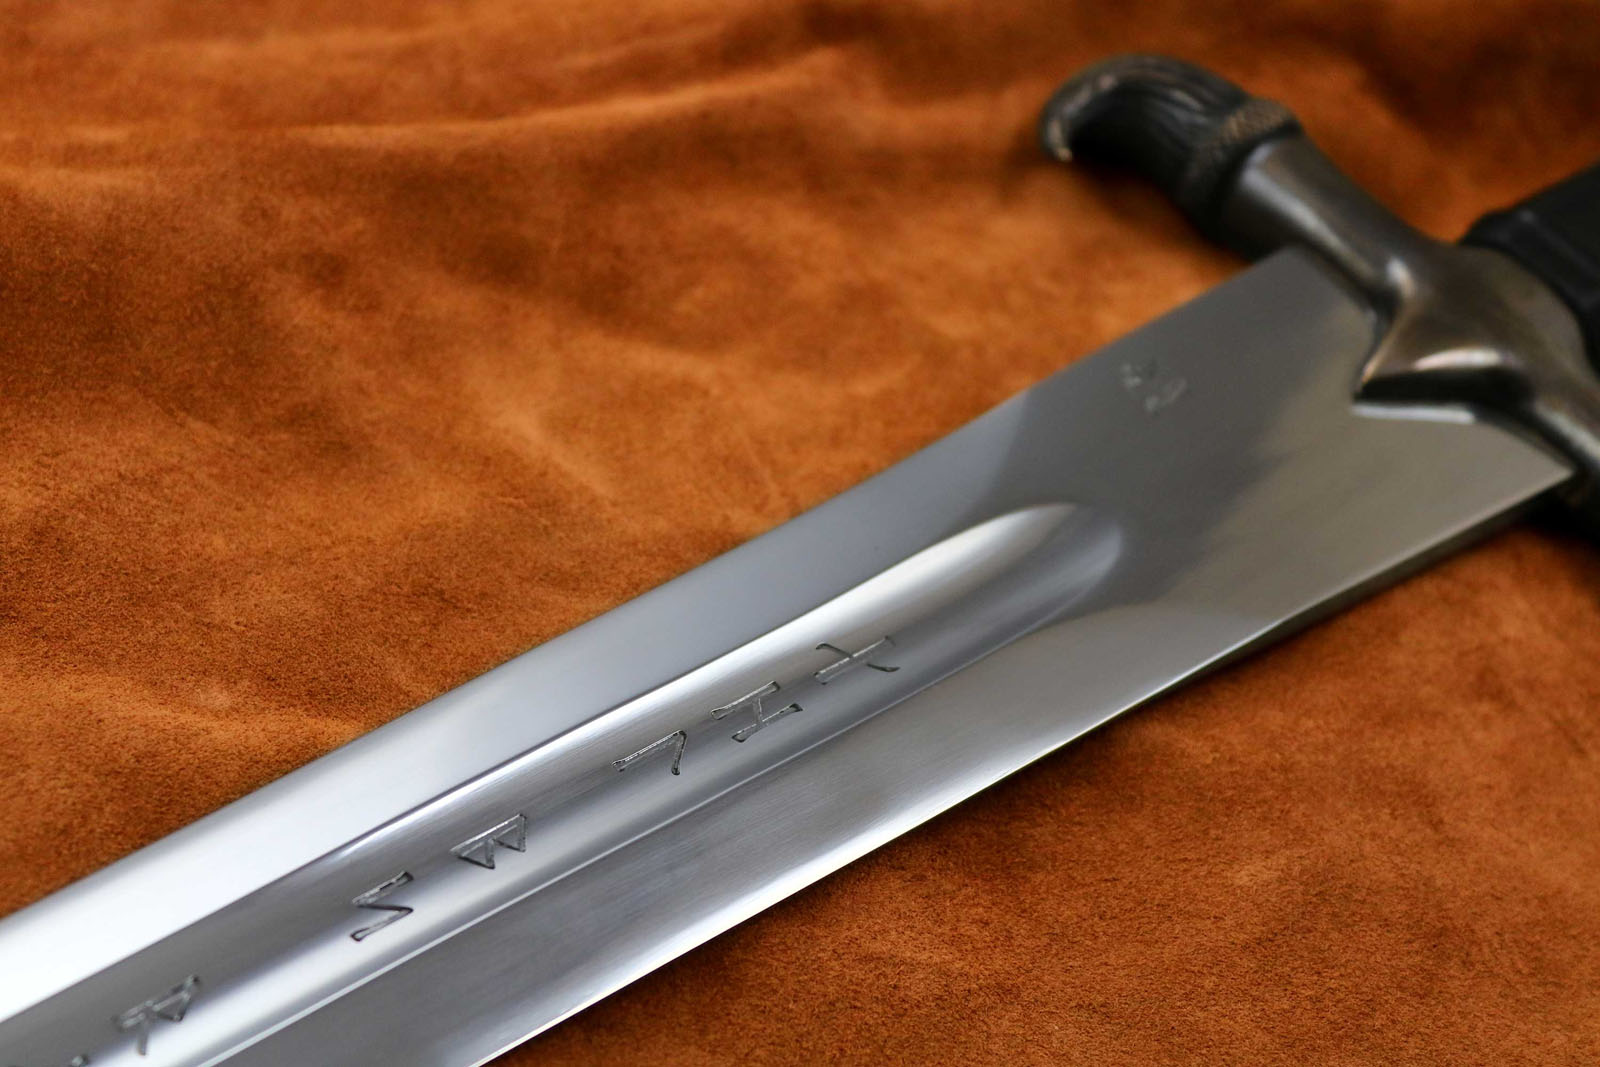 The Erland Sword